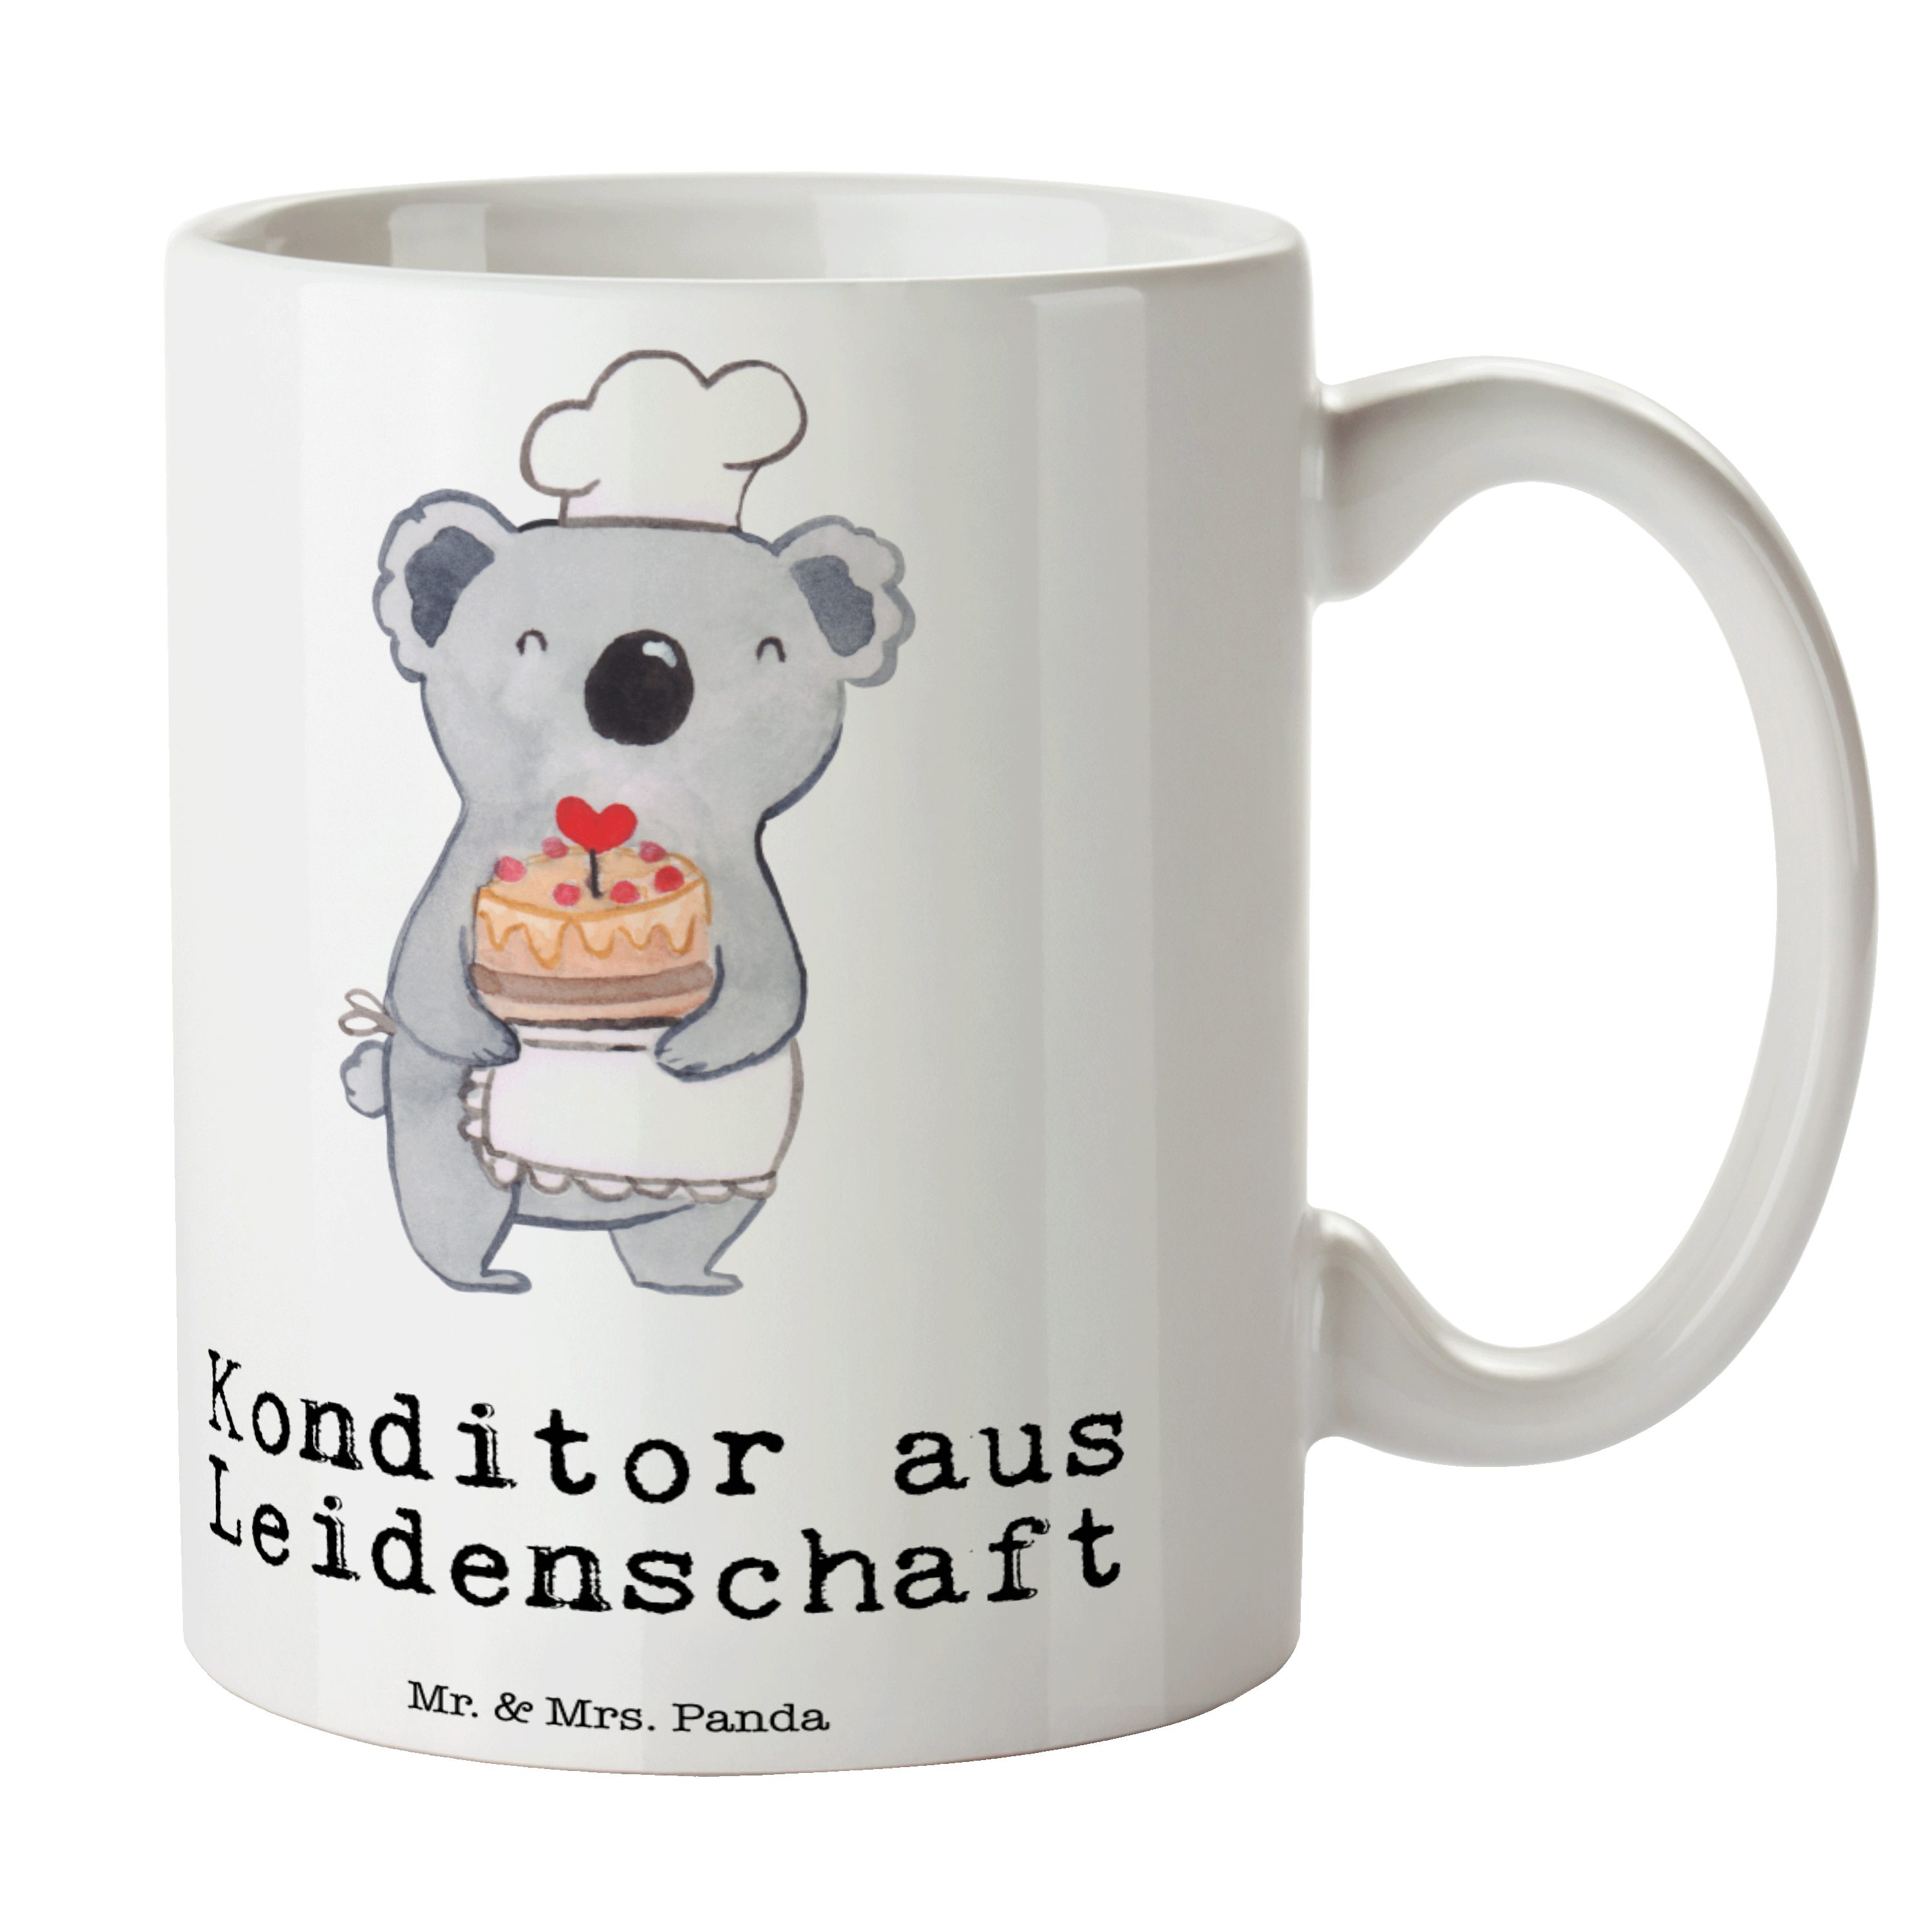 - Keramik Mrs. Panda Dankeschön, Leidenschaft Mr. Weiß & aus Kuchenbäcker, Konditor Geschenk, - Tasse